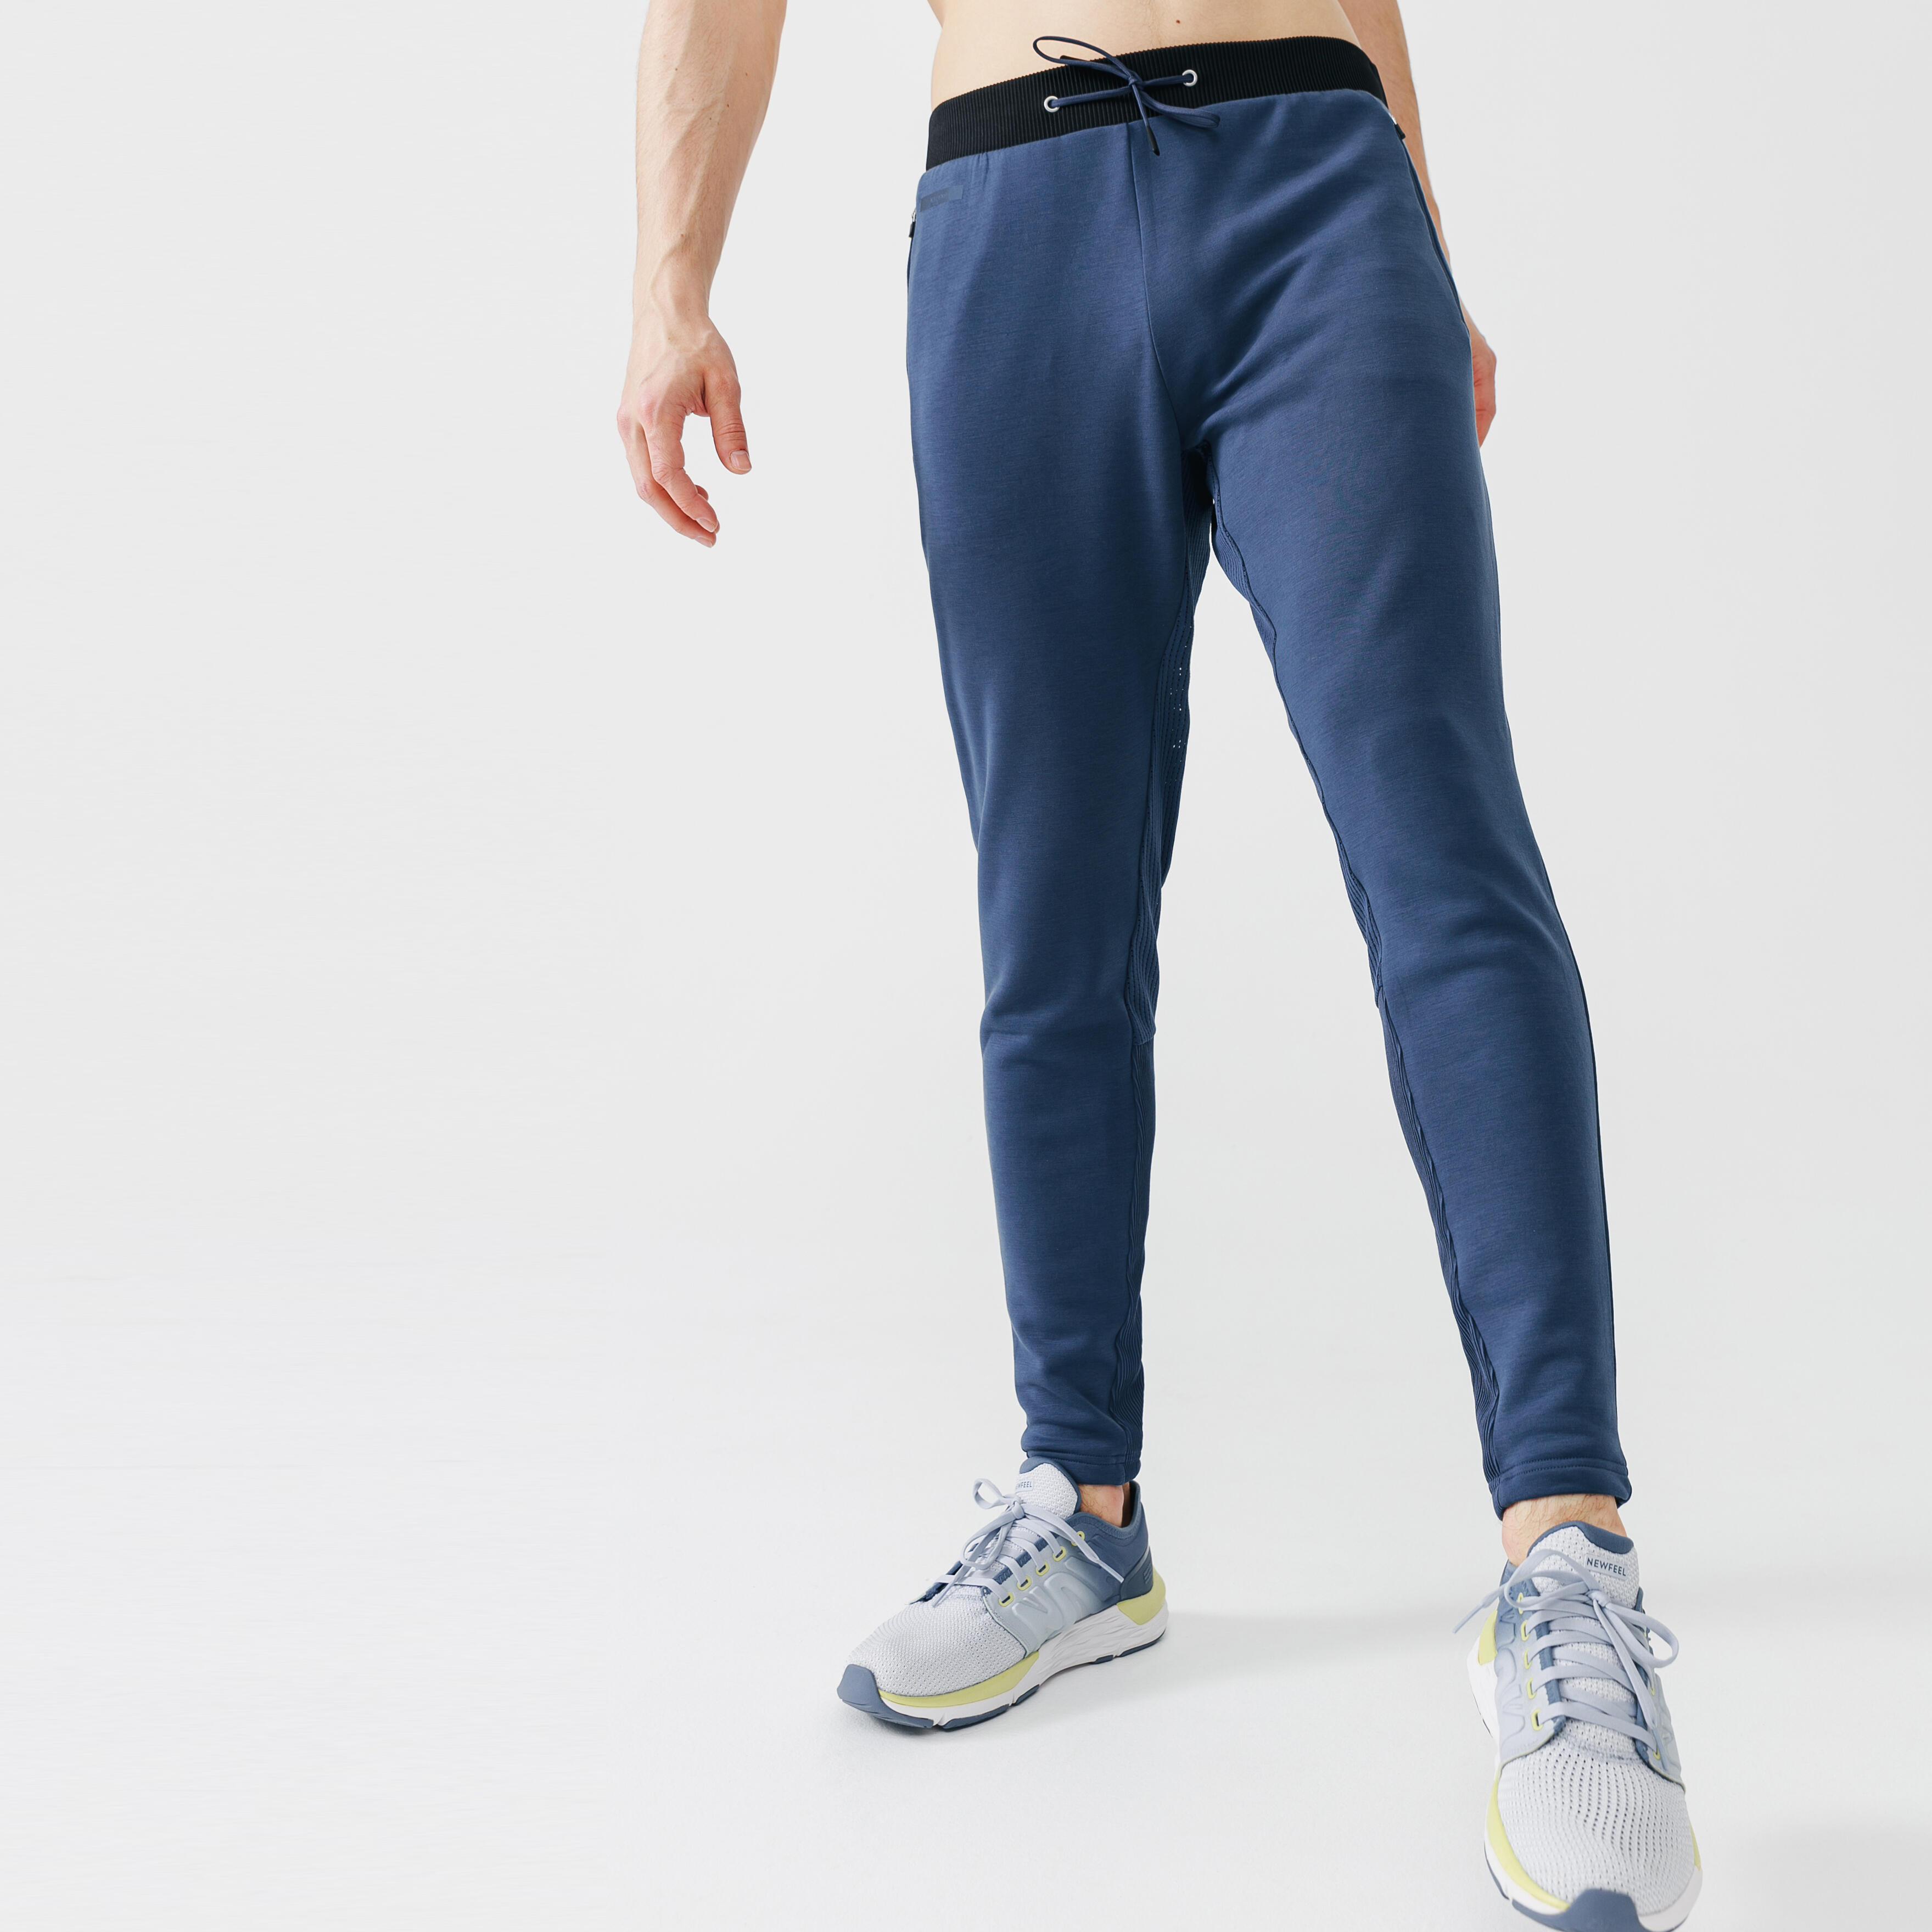 Buy Kalenji Warm+ Men's Running Trousers - Slate Blue Online | Decathlon